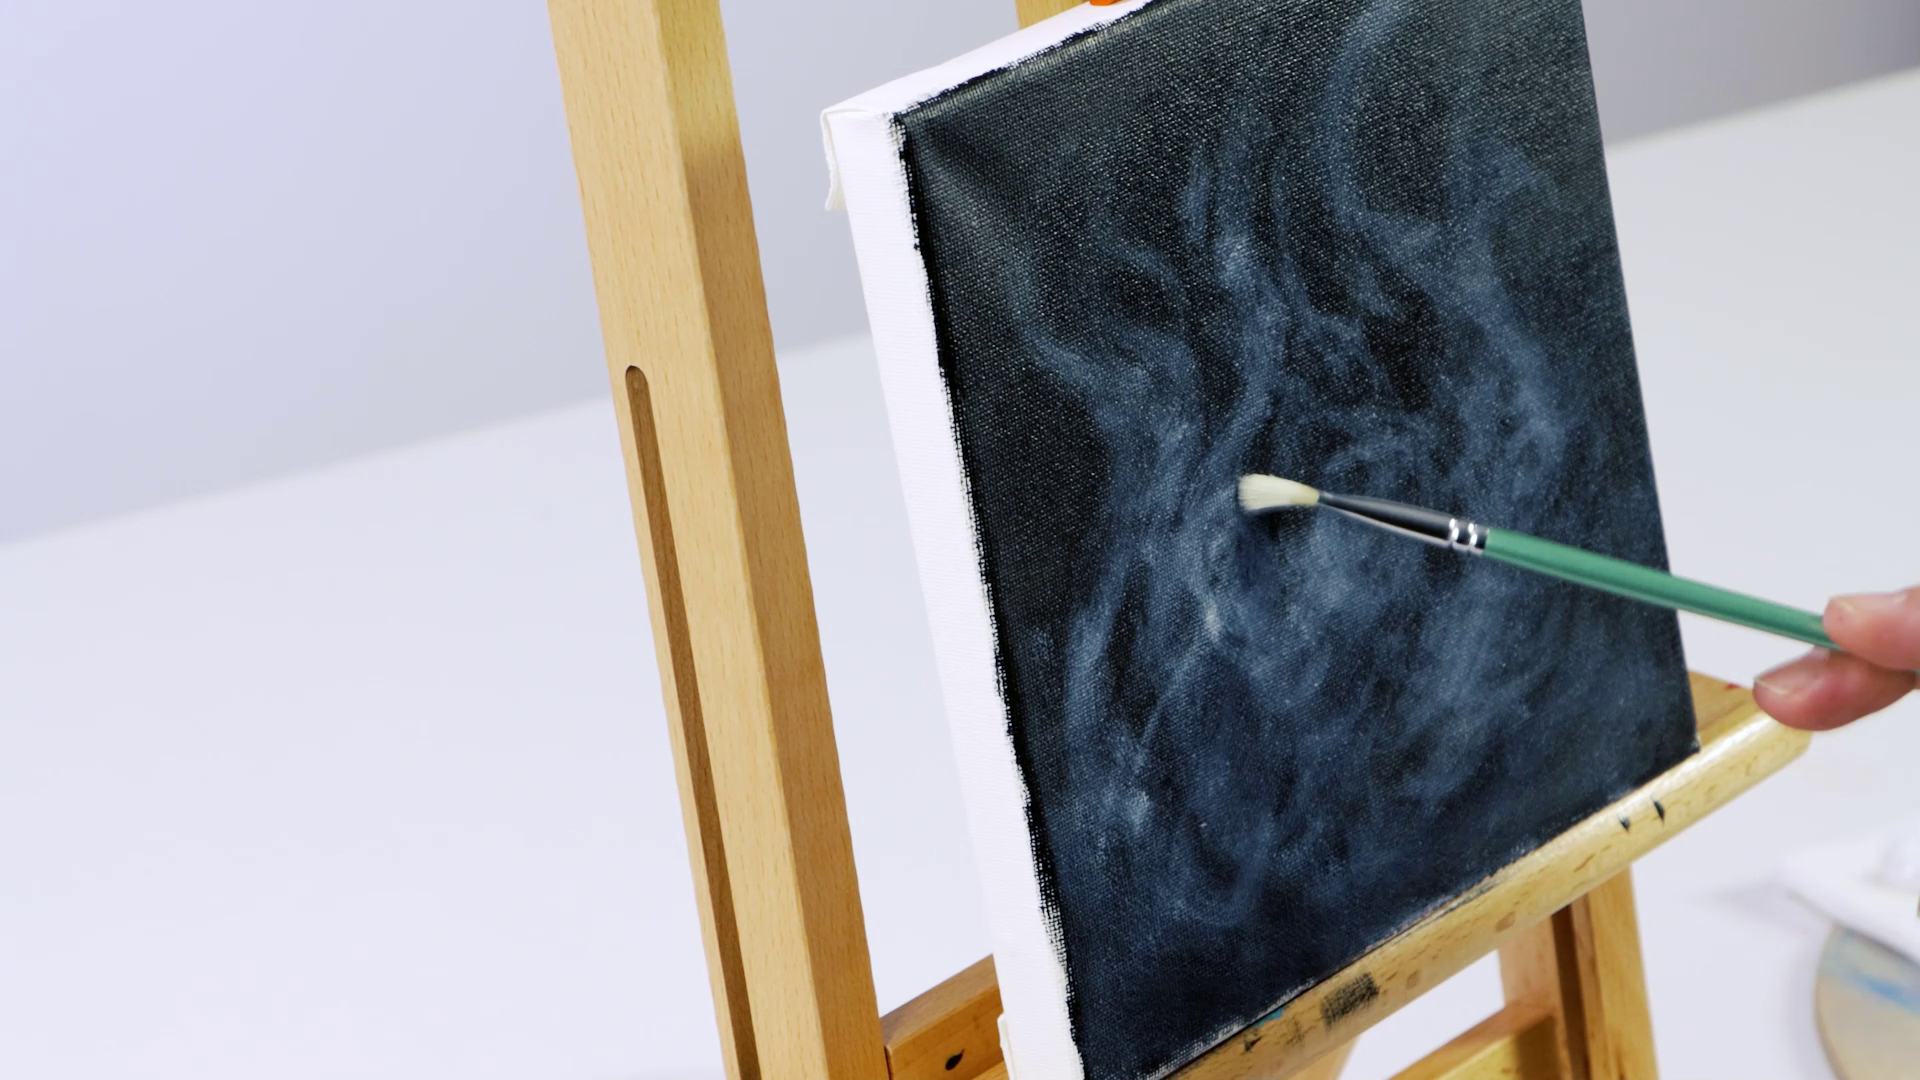 10. White paint scumbled onto a black painted canvas